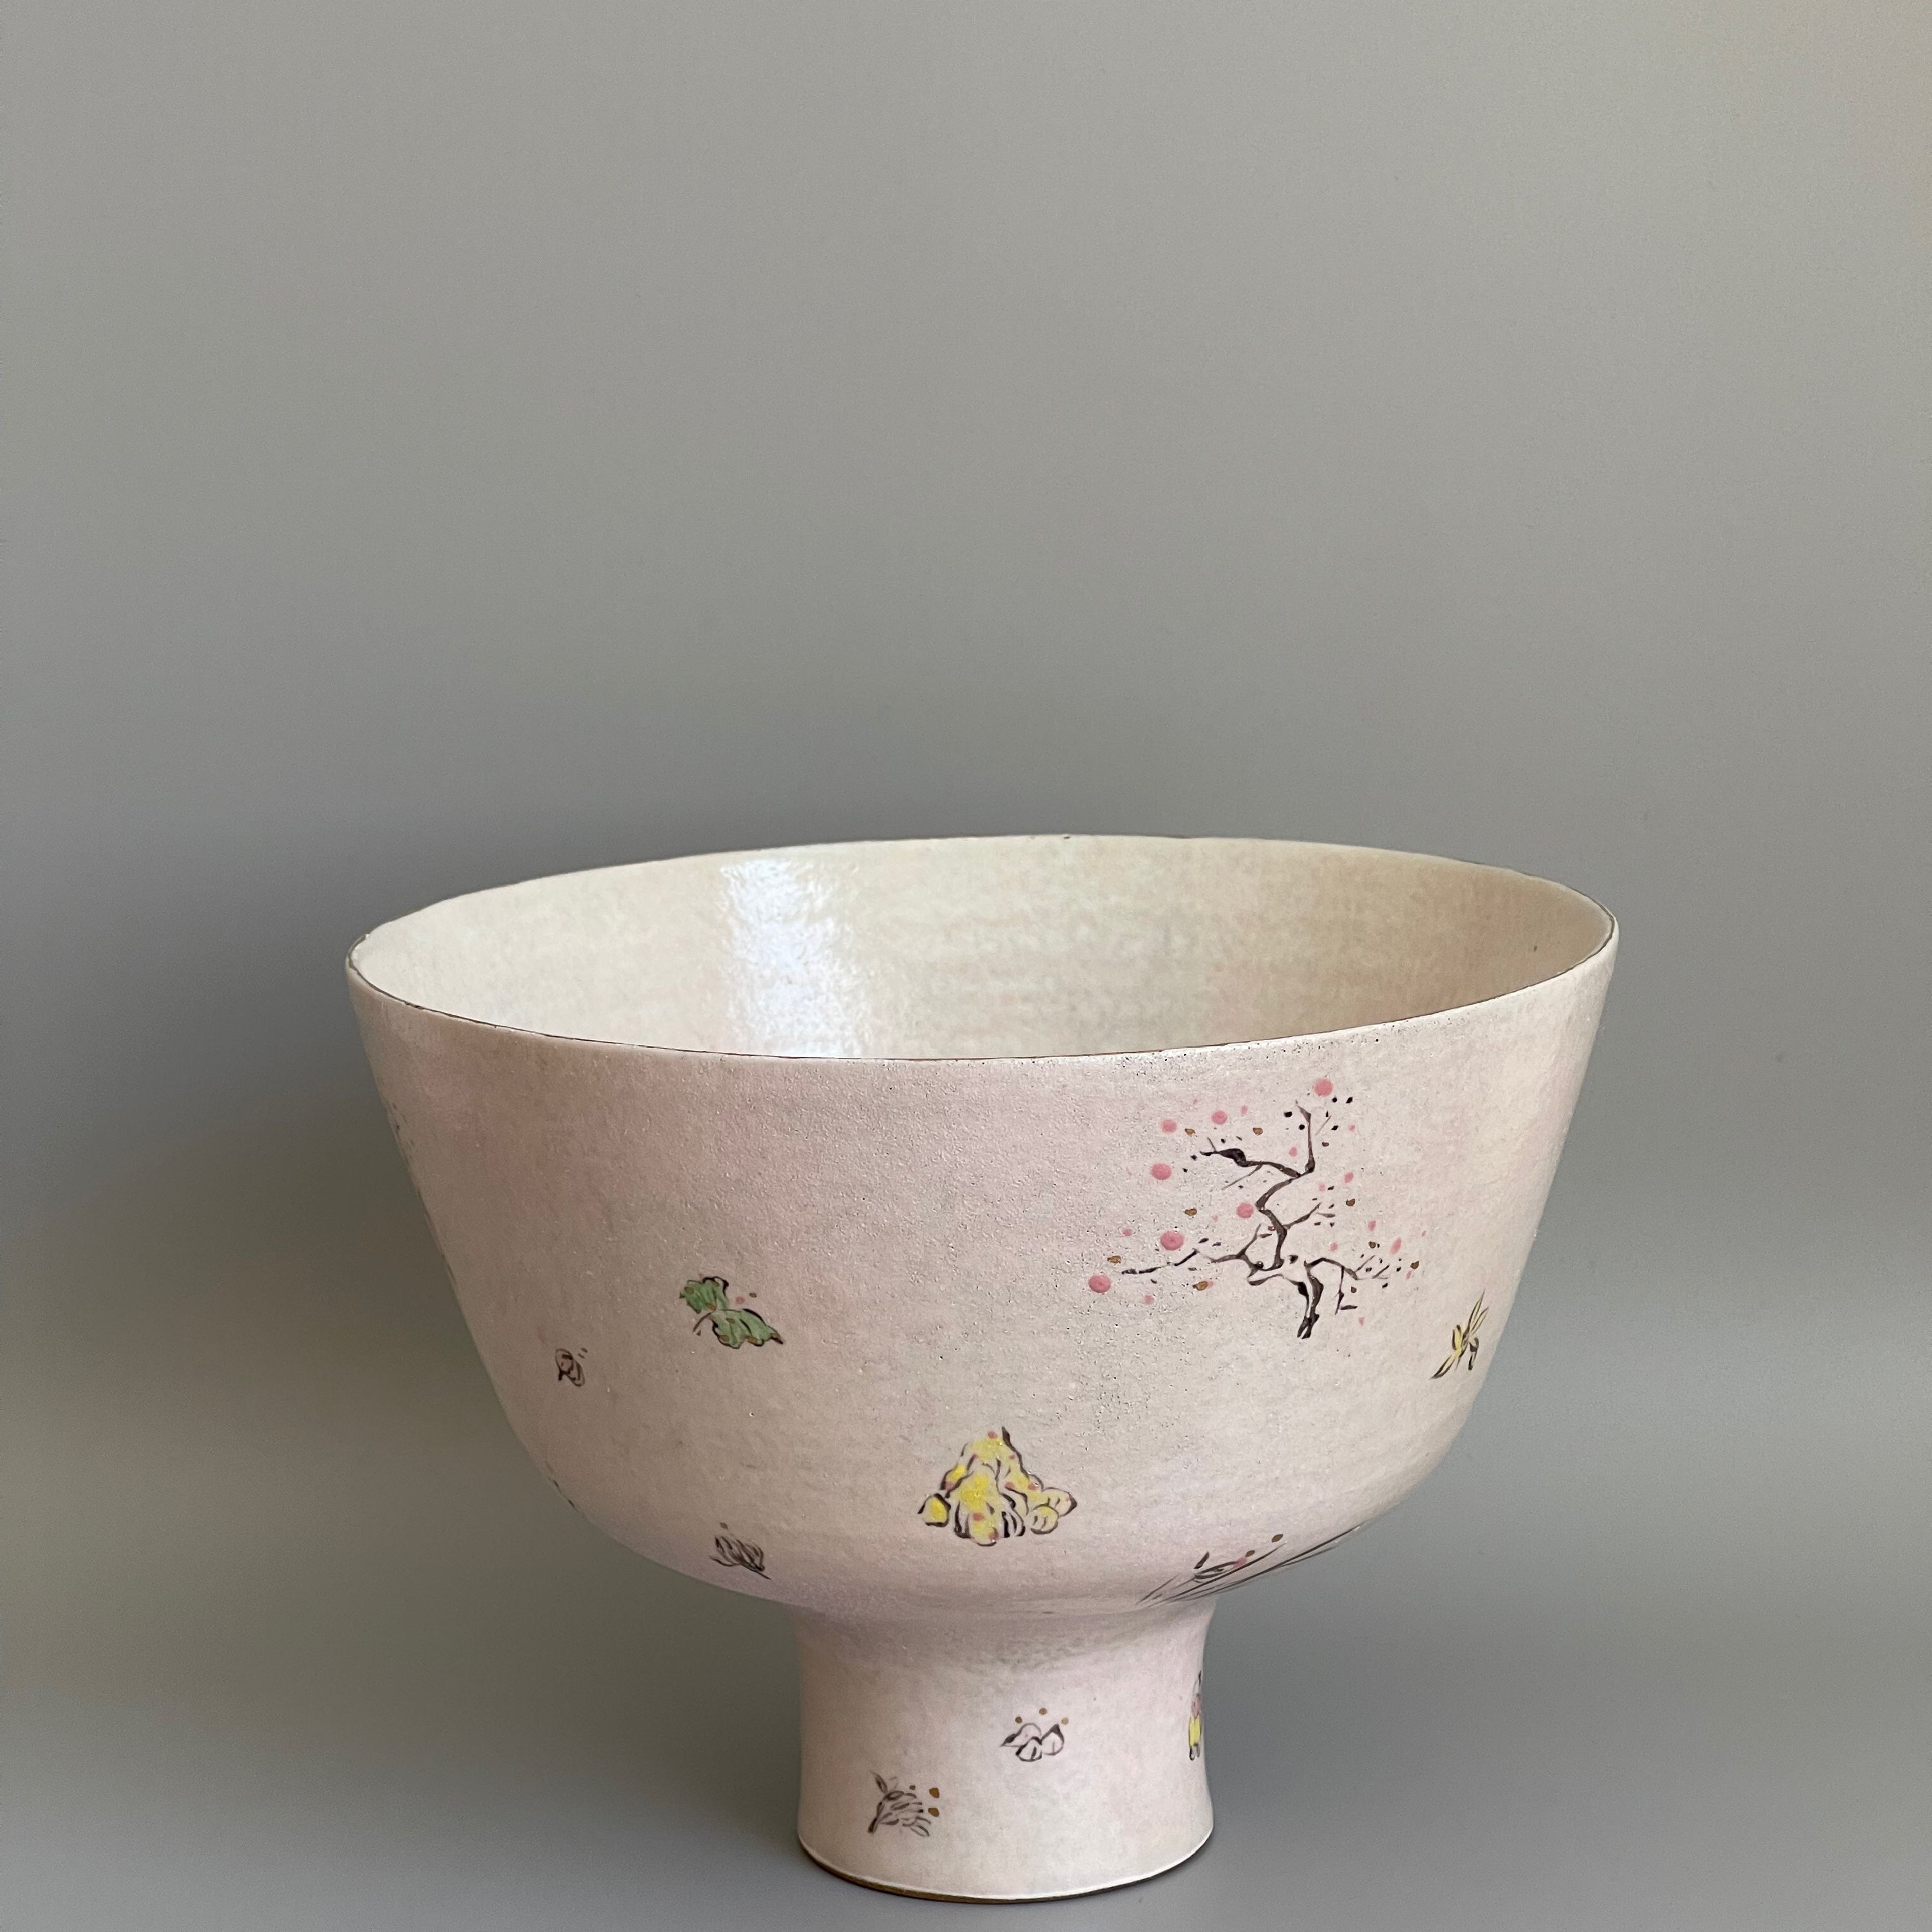 The Garden Vase, Bowl